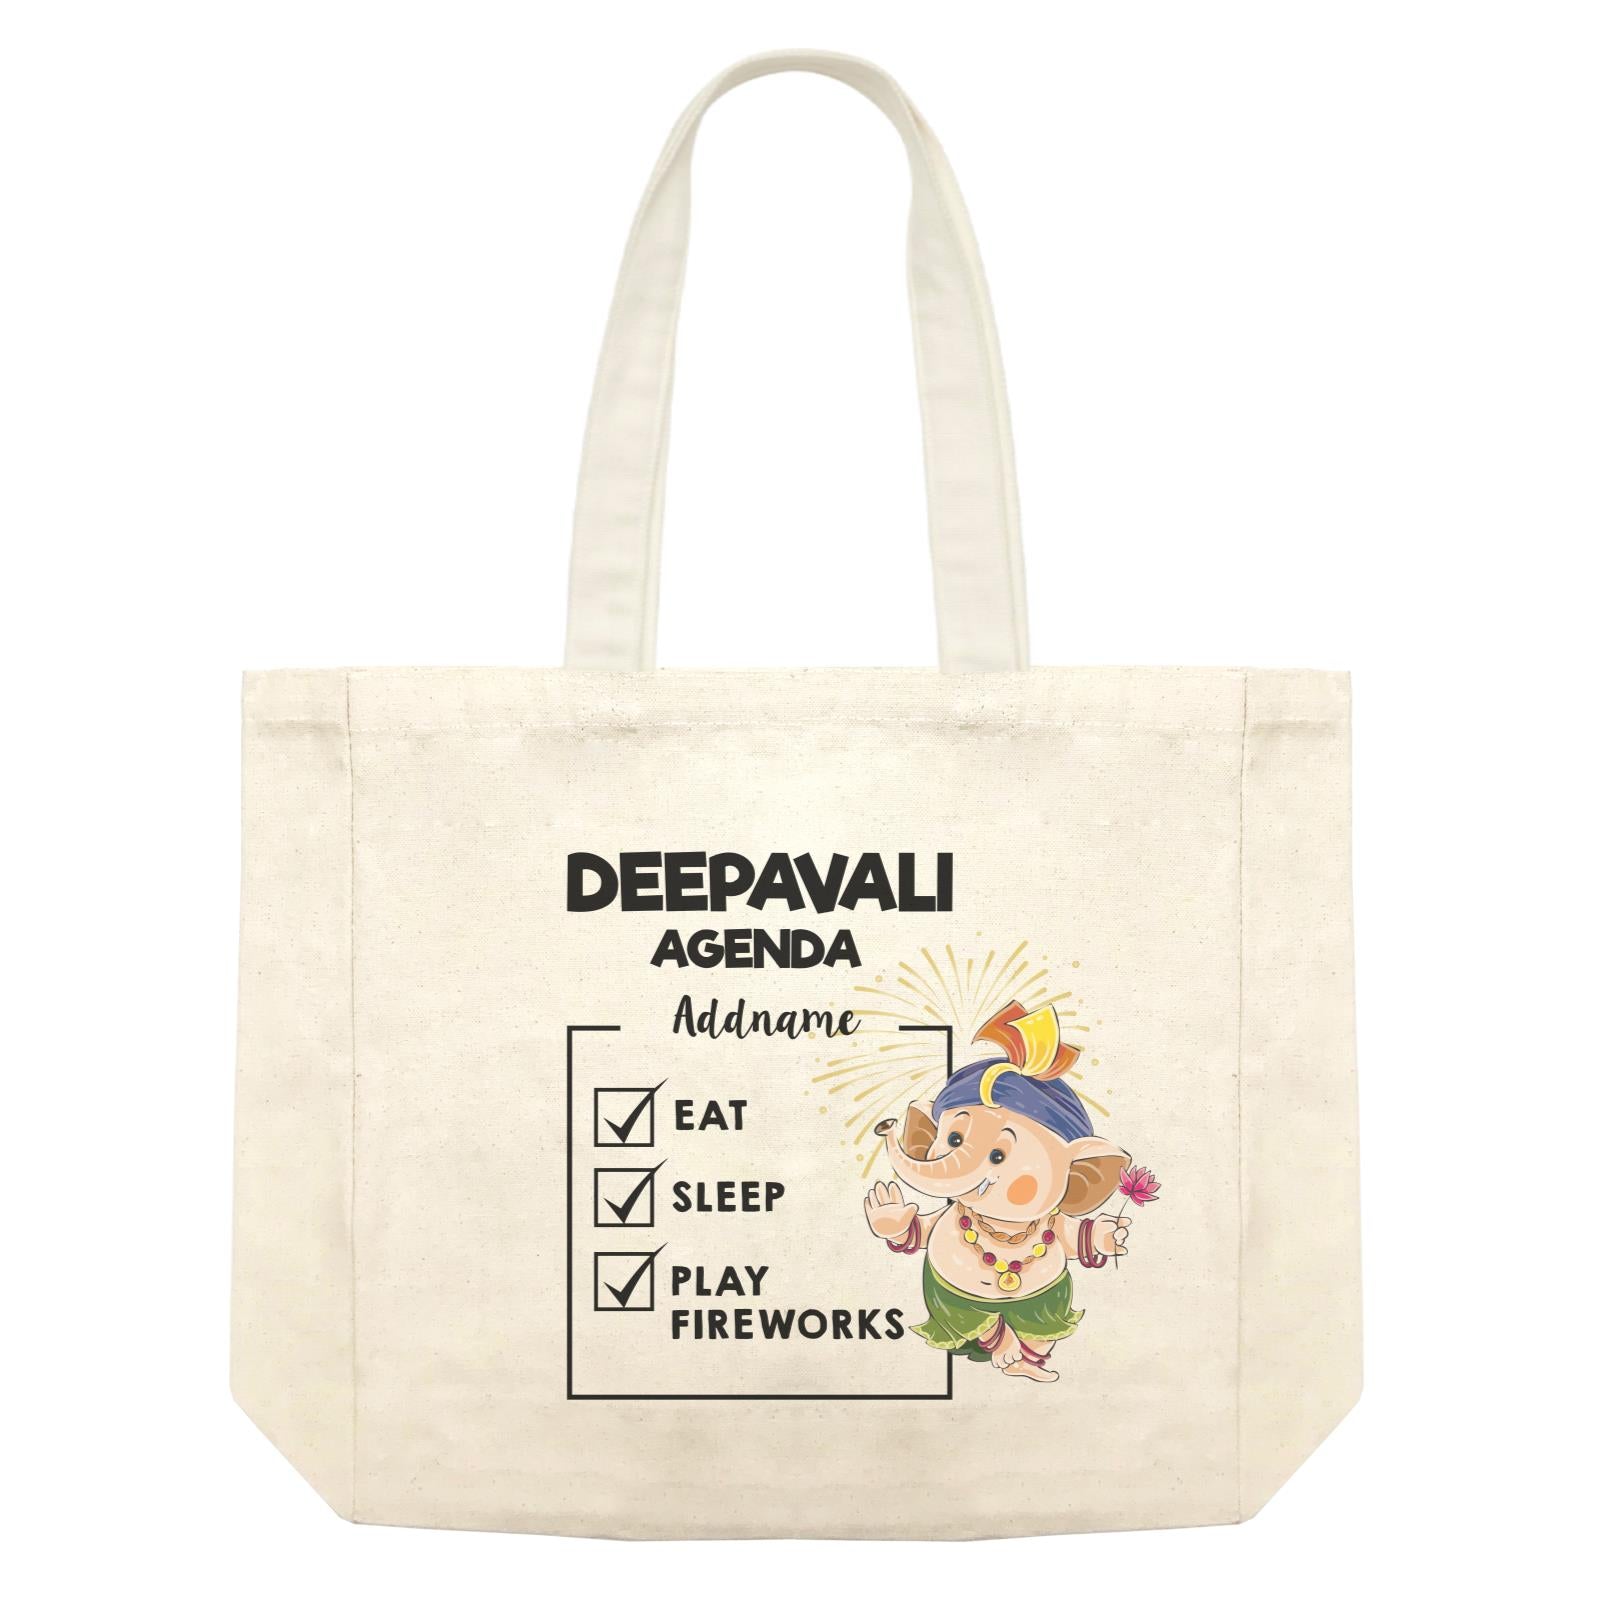 Cute Ganesha Fireworks Addname Deepavali Agenda Shopping Bag